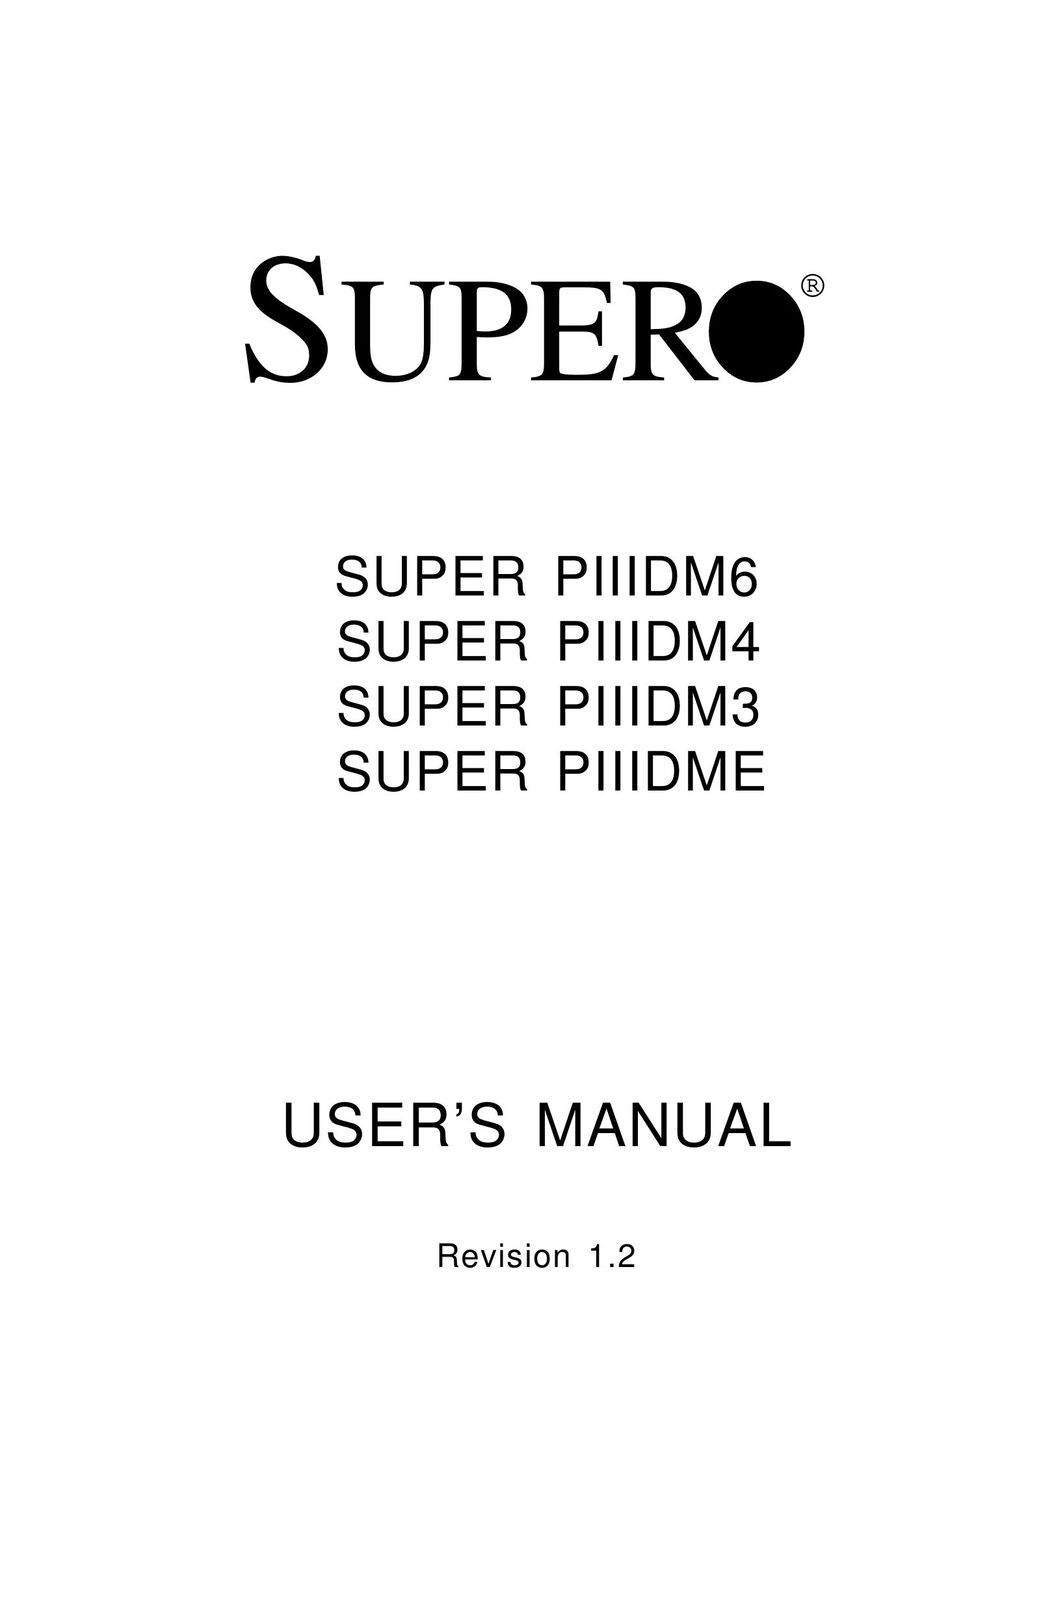 SUPER MICRO Computer Super PIIIDME Computer Hardware User Manual